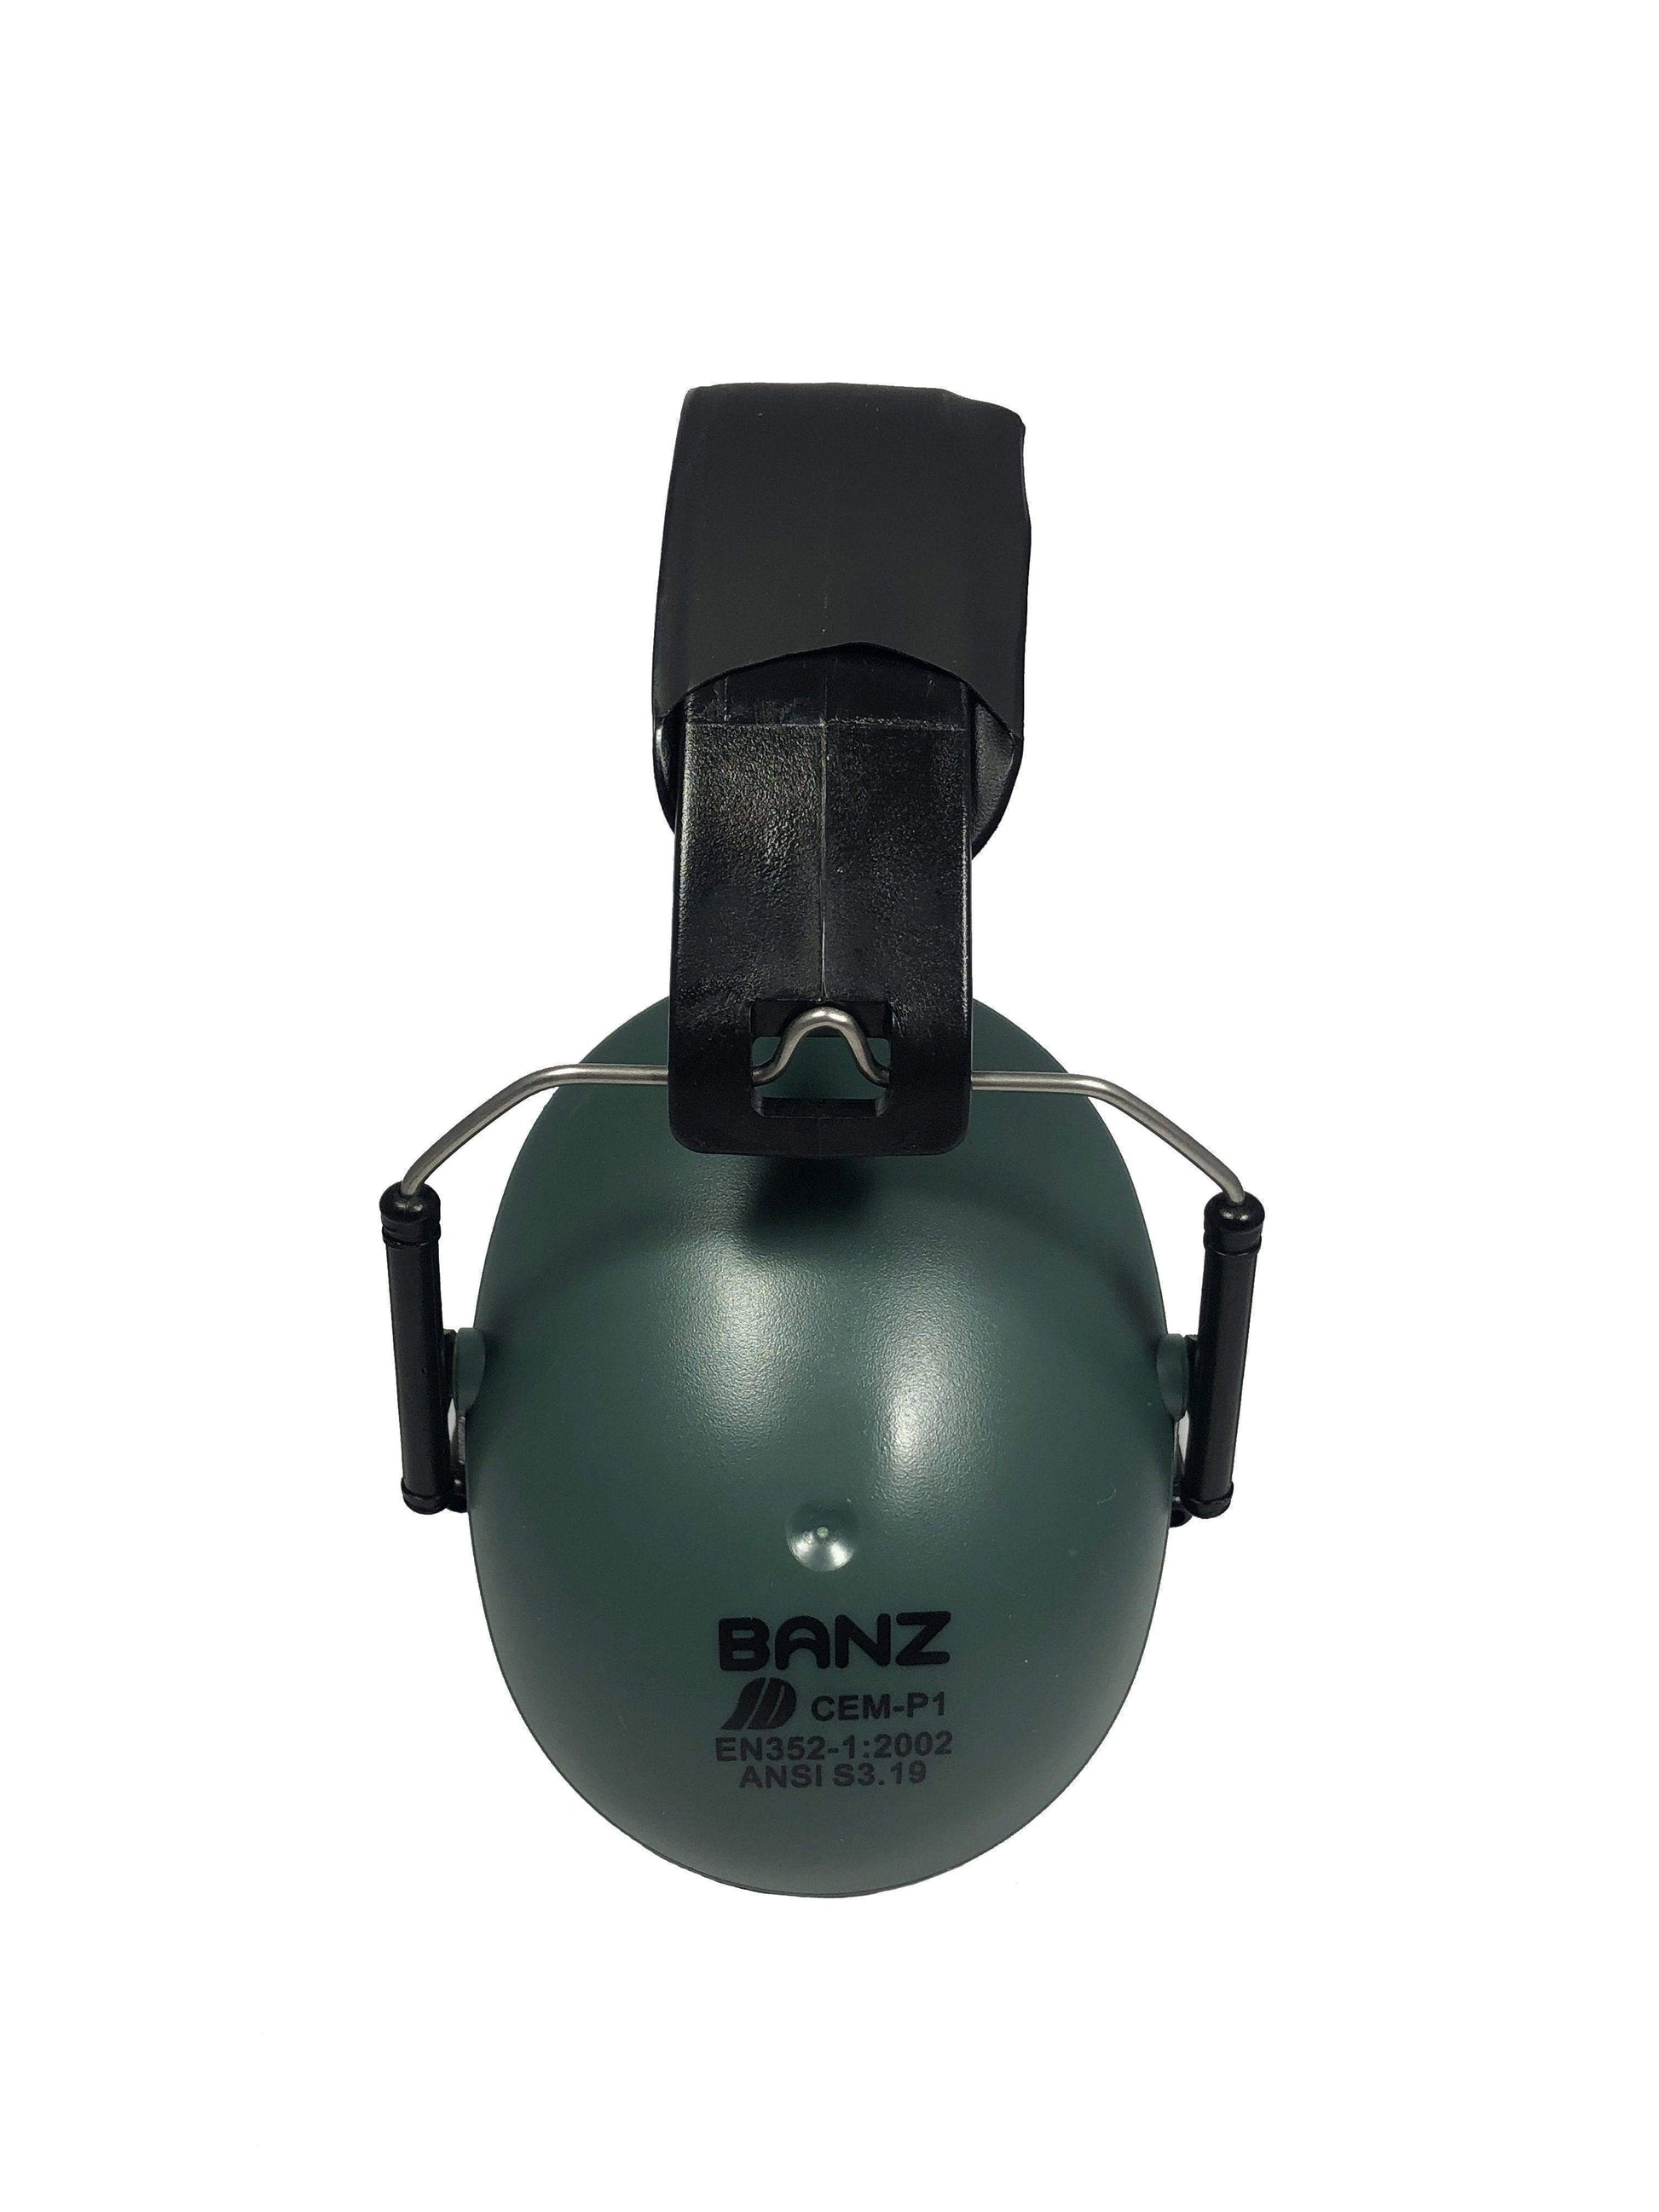 BANZ Hearing Protection Kids Earmuffs - Solids Dark Green